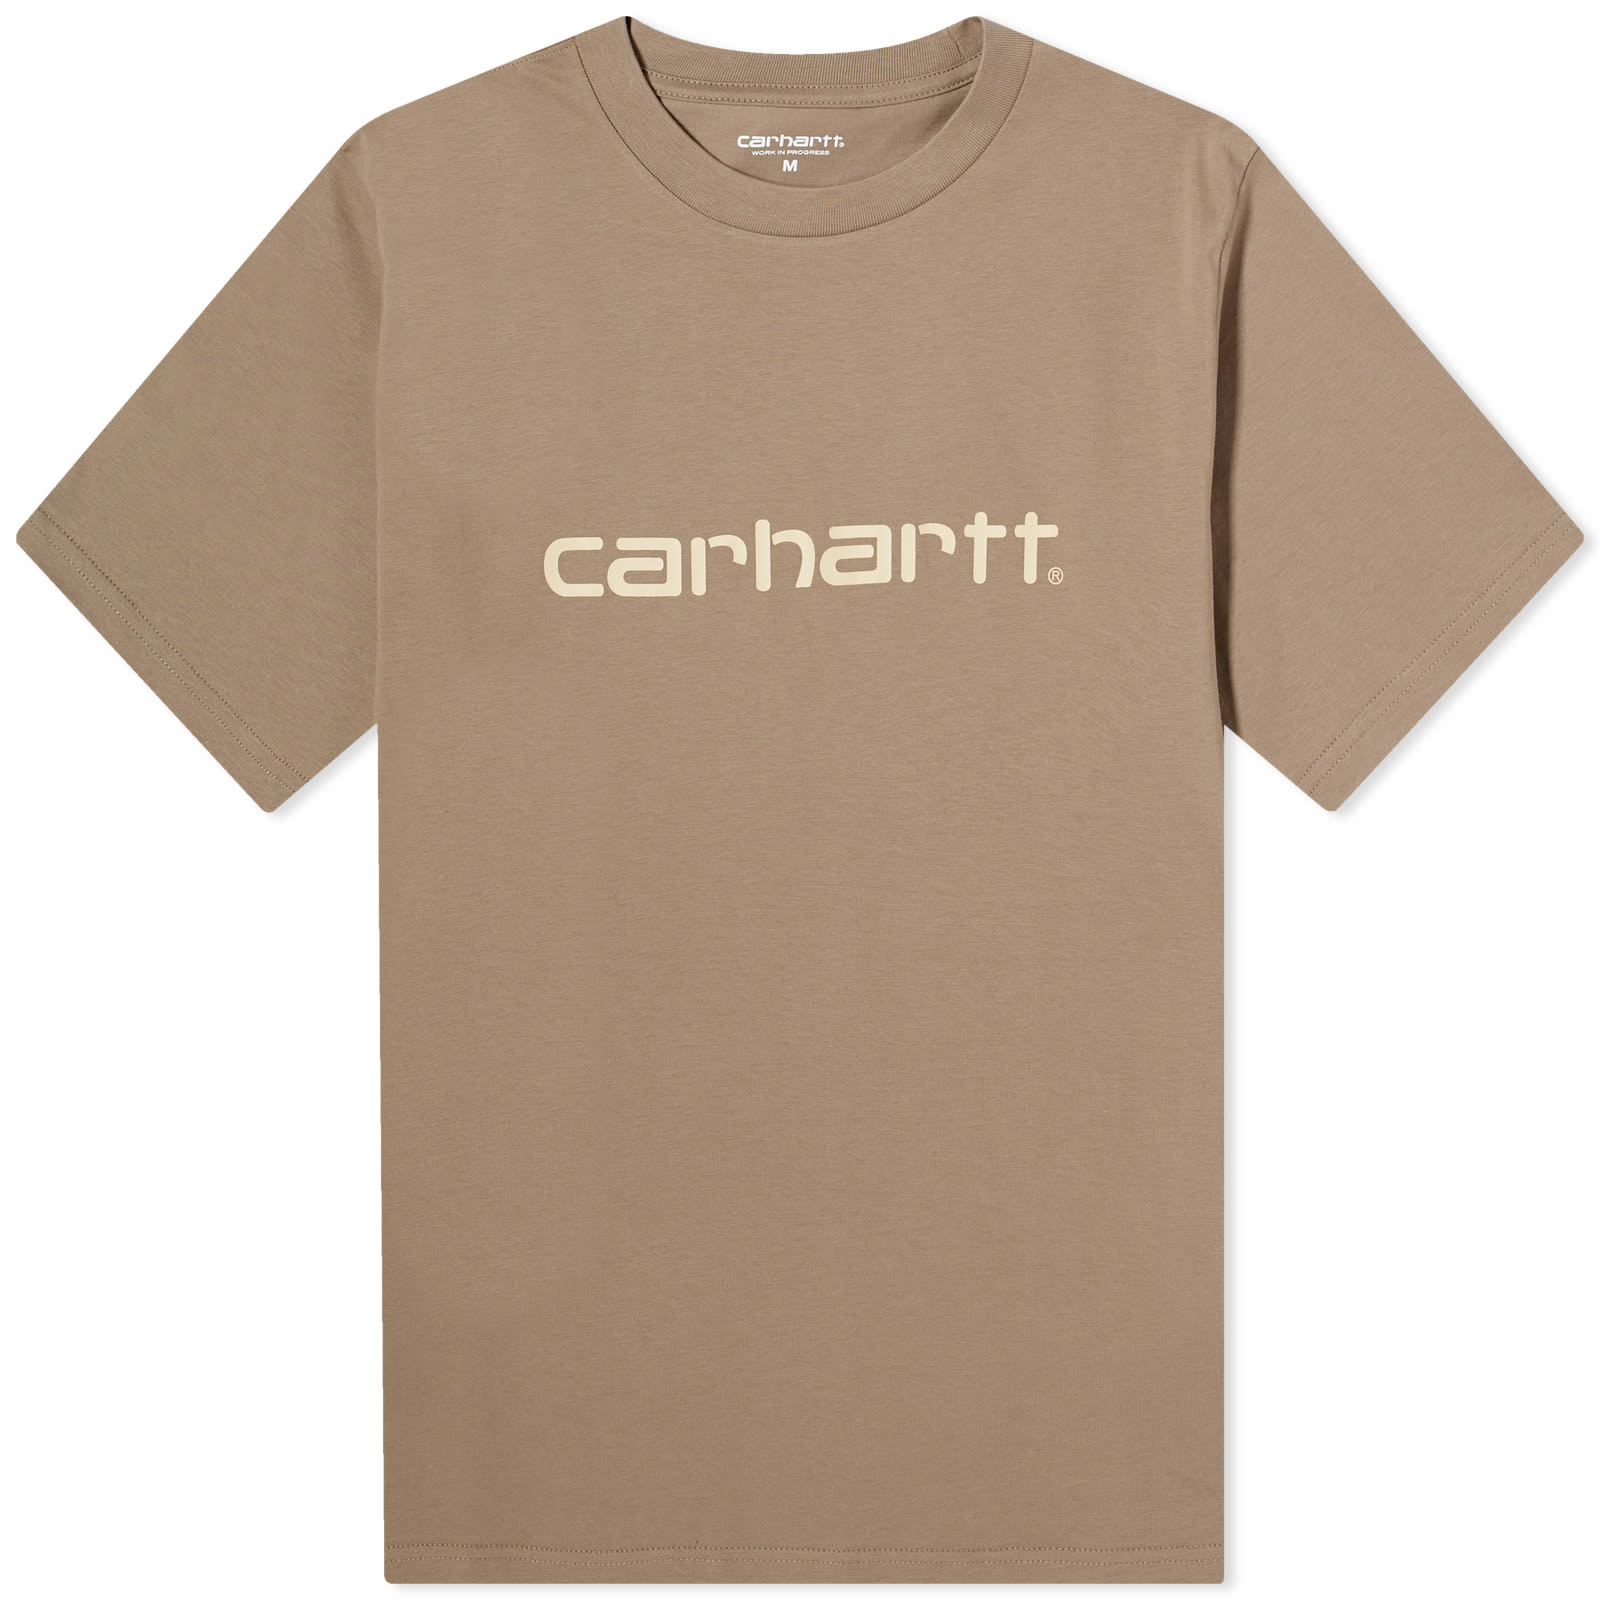 Футболка Carhartt Wip Script, светло-коричневый футболка carhartt wip script светло коричневый